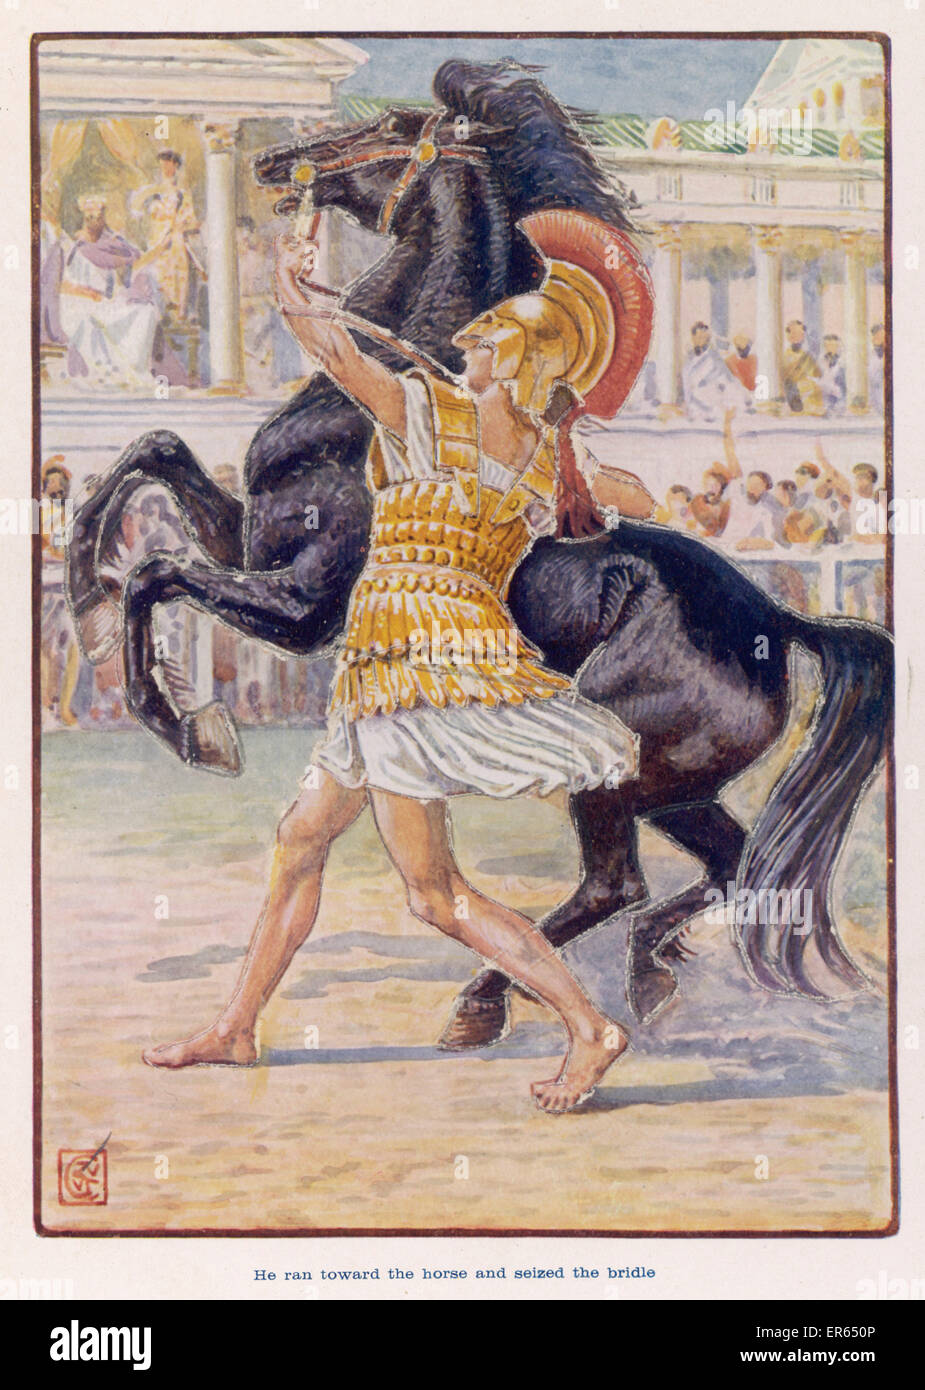 La sangre del padre: Alejandro Magno al desnudo